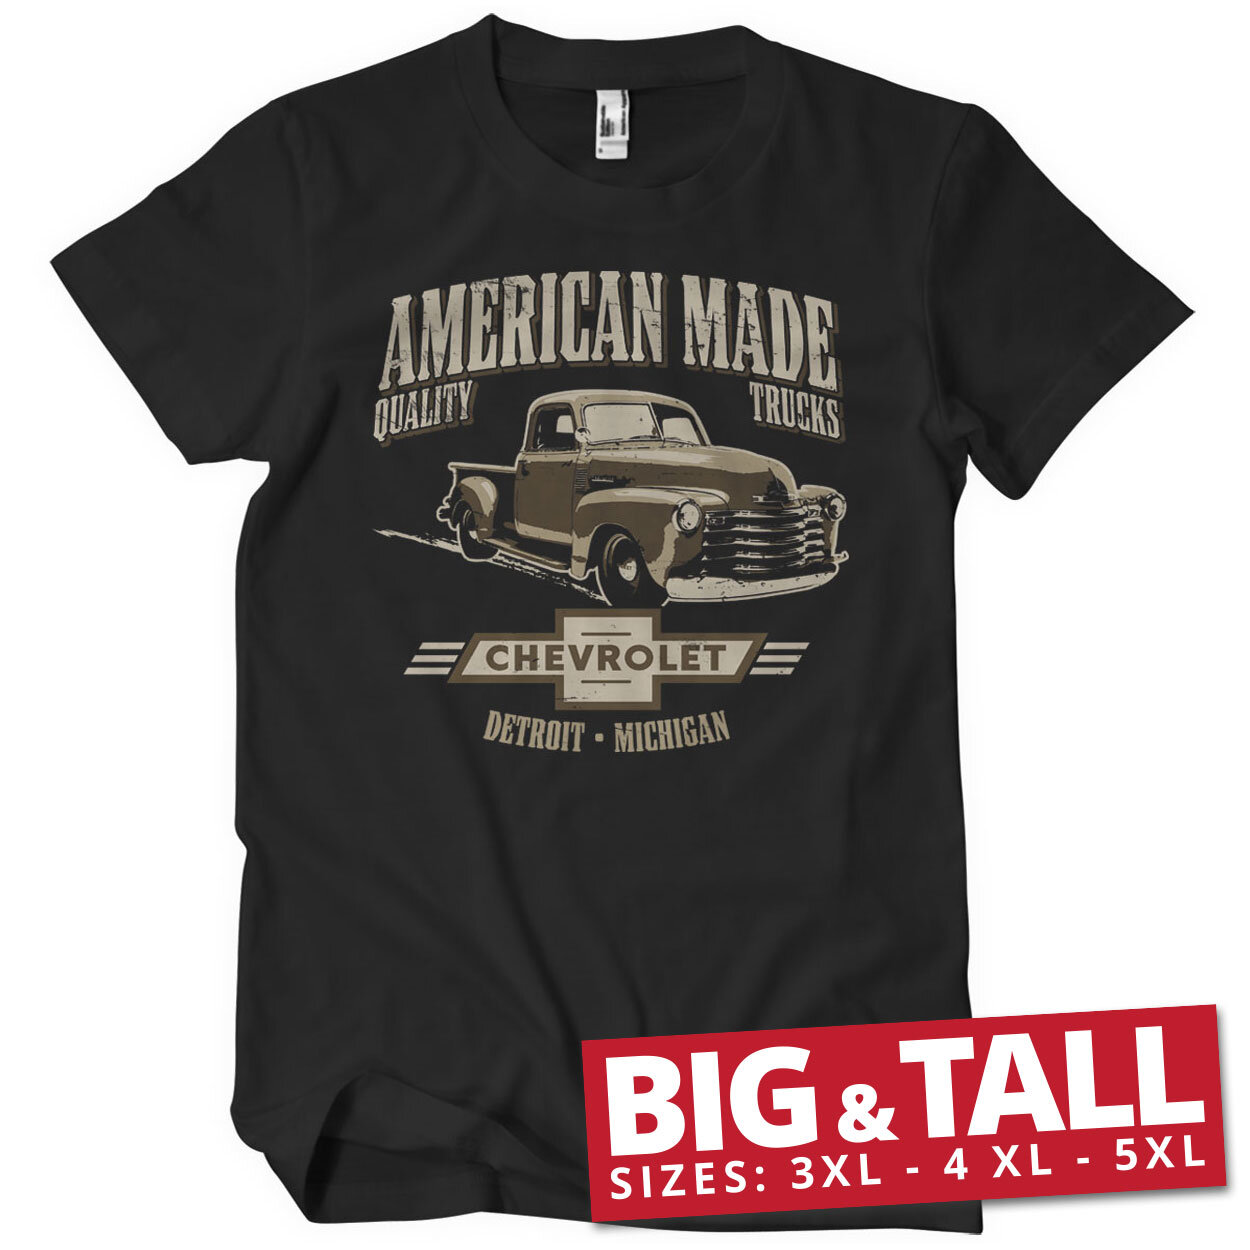 American Made Quality Trucks Big & Tall T-Shirt